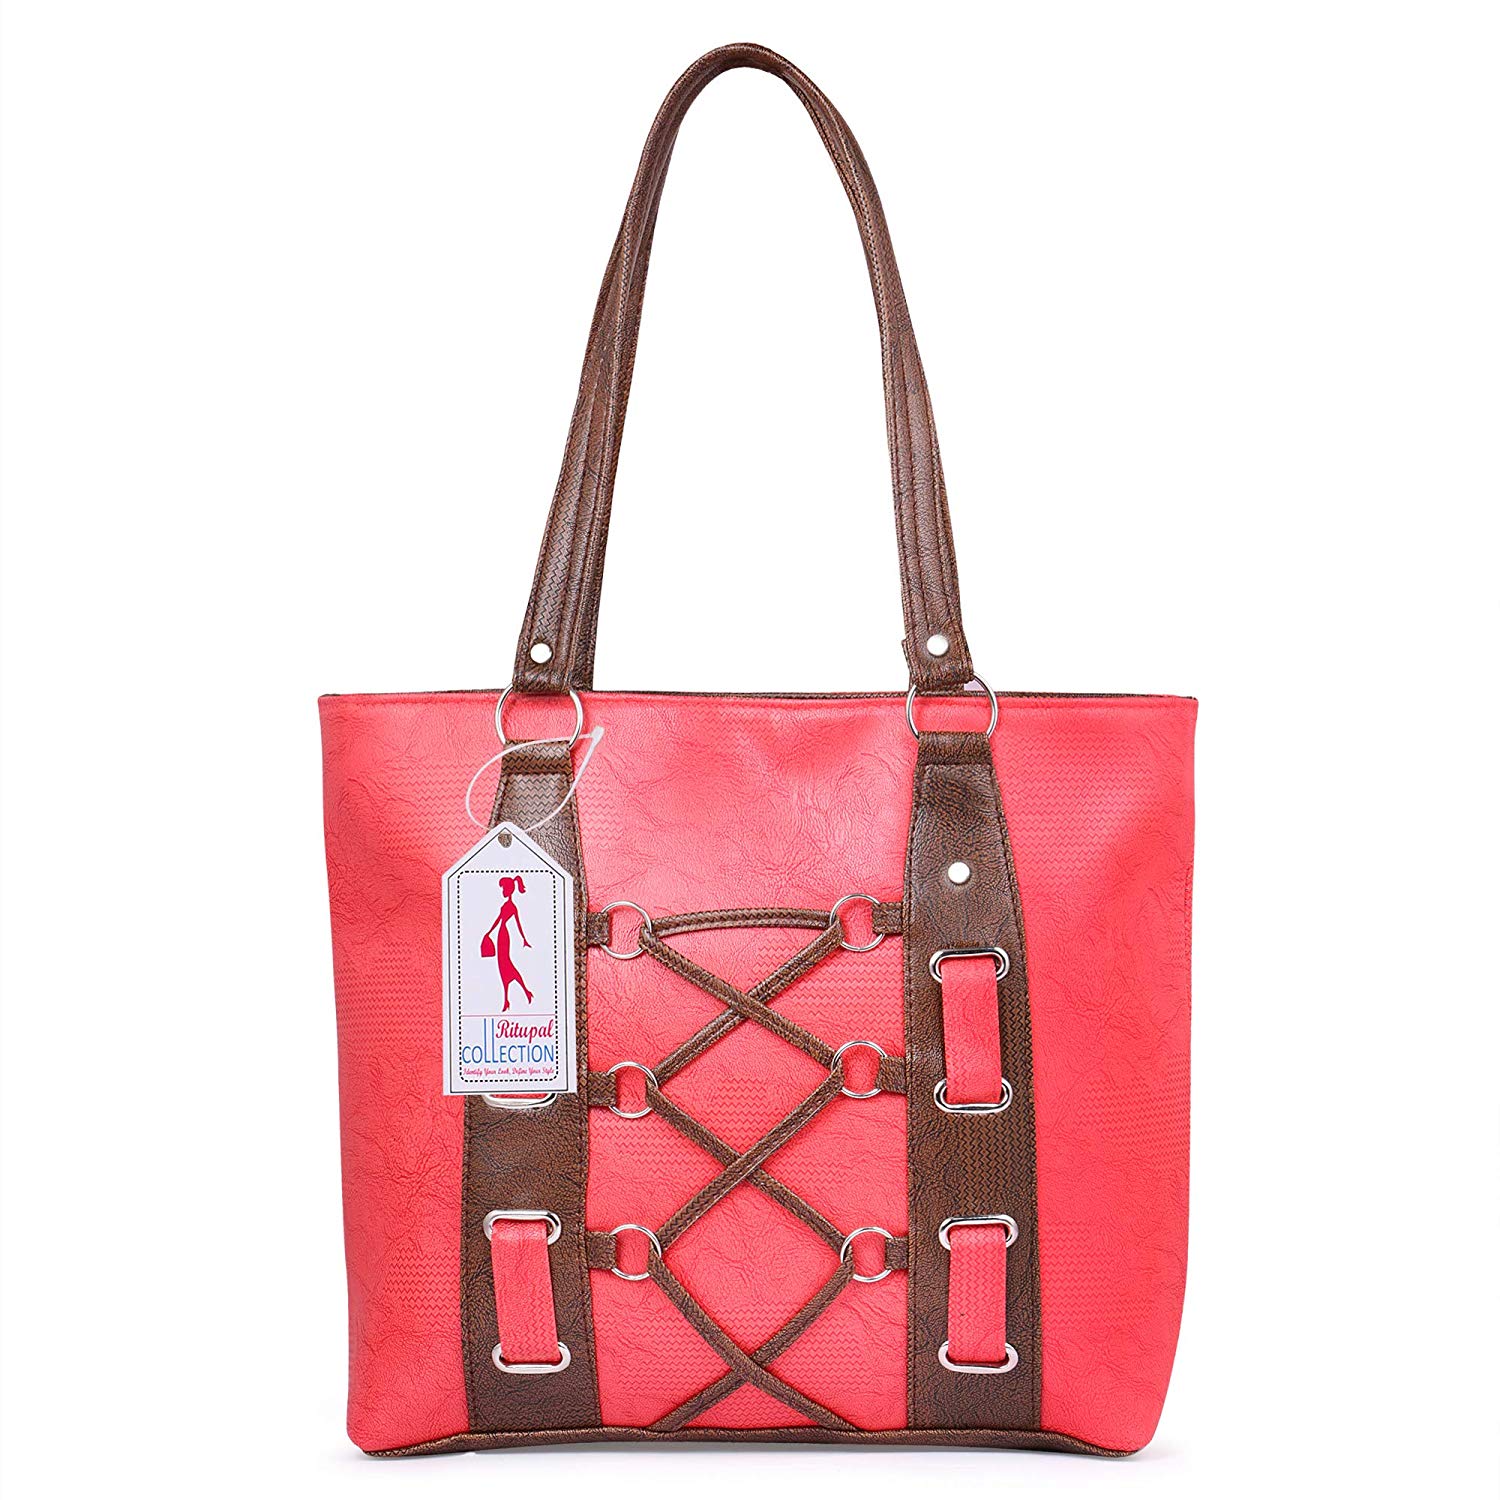 Ritupal collection Women's Handbag (Coffee) – Ritupal Collection